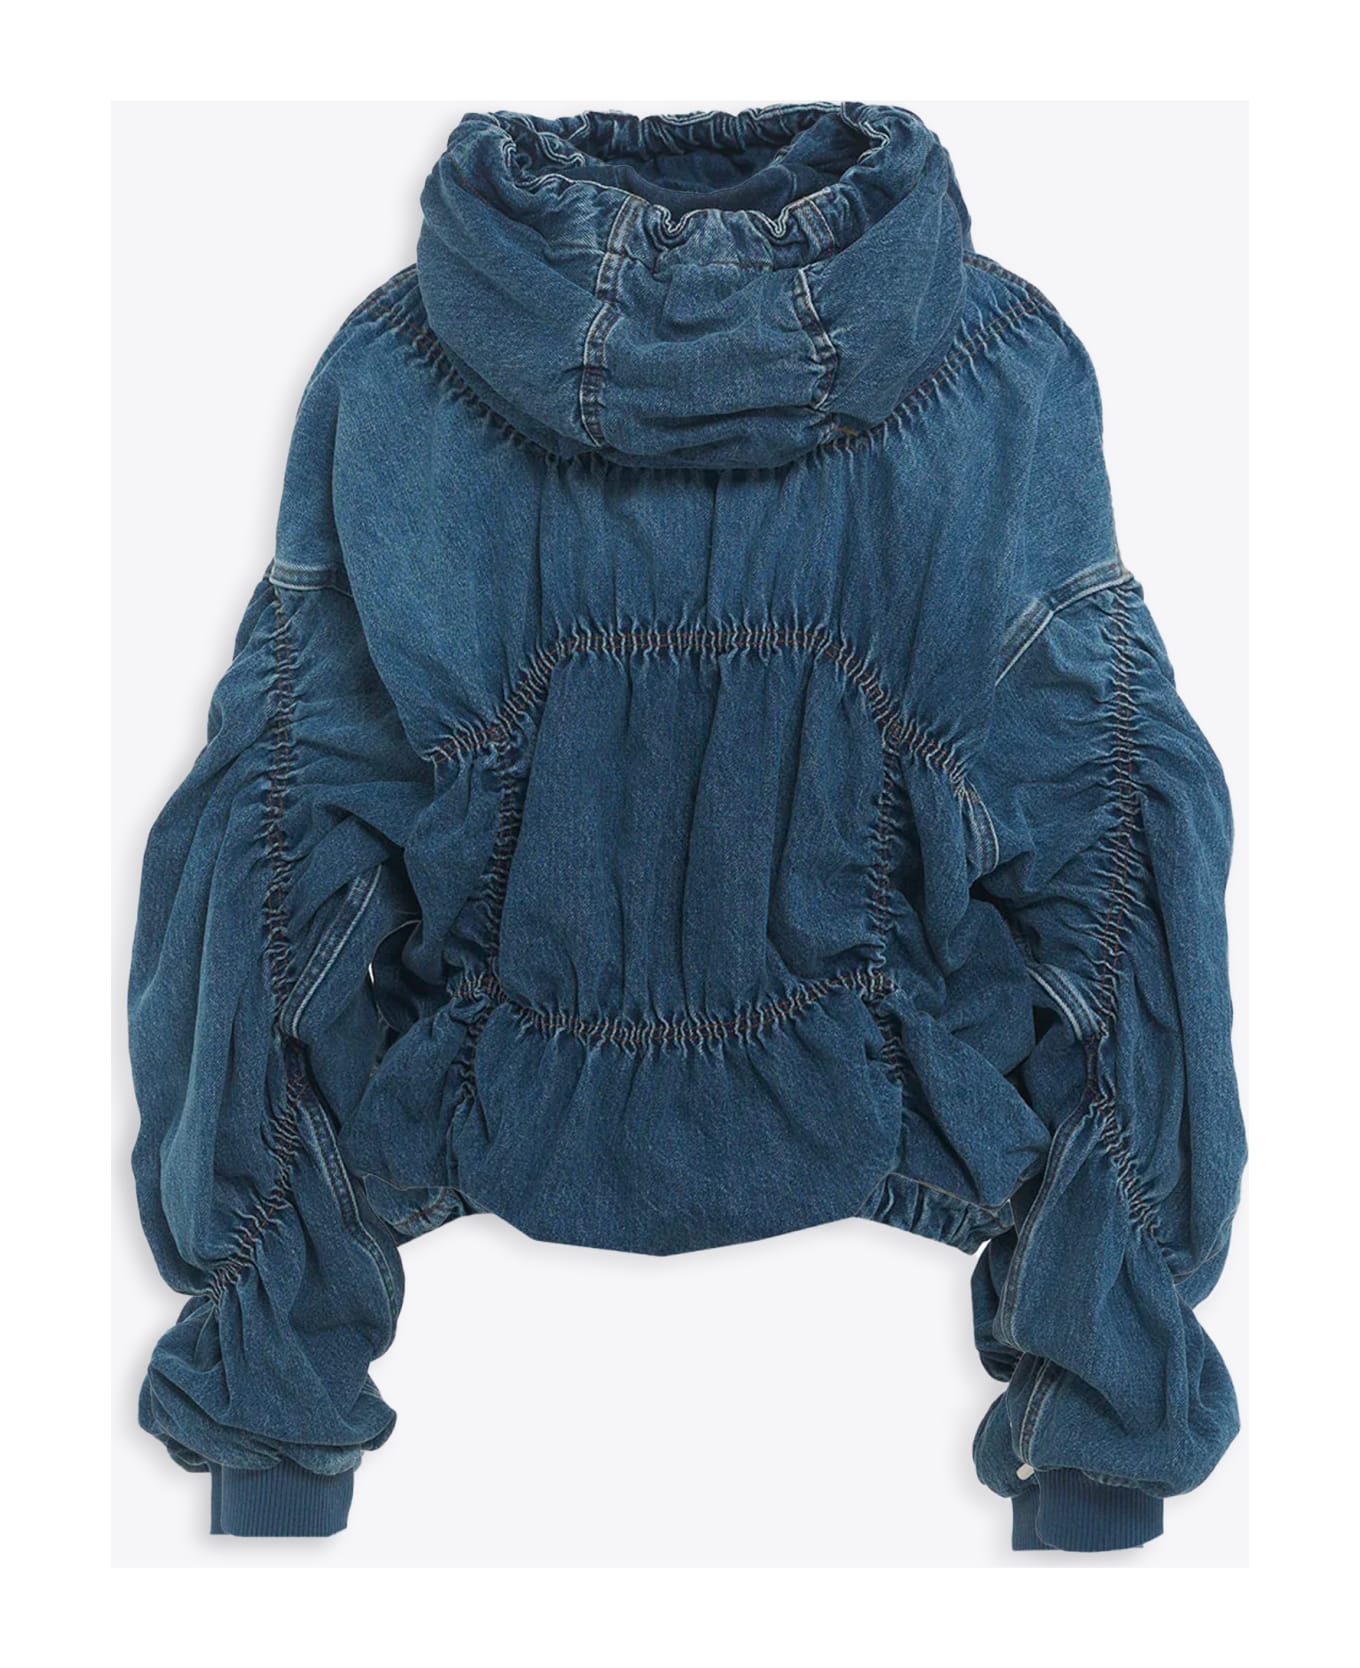 Khrisjoy Khris Cloud Denim Medium blue denim hooded bomber jacket - Khris Cloud Denim - Denim